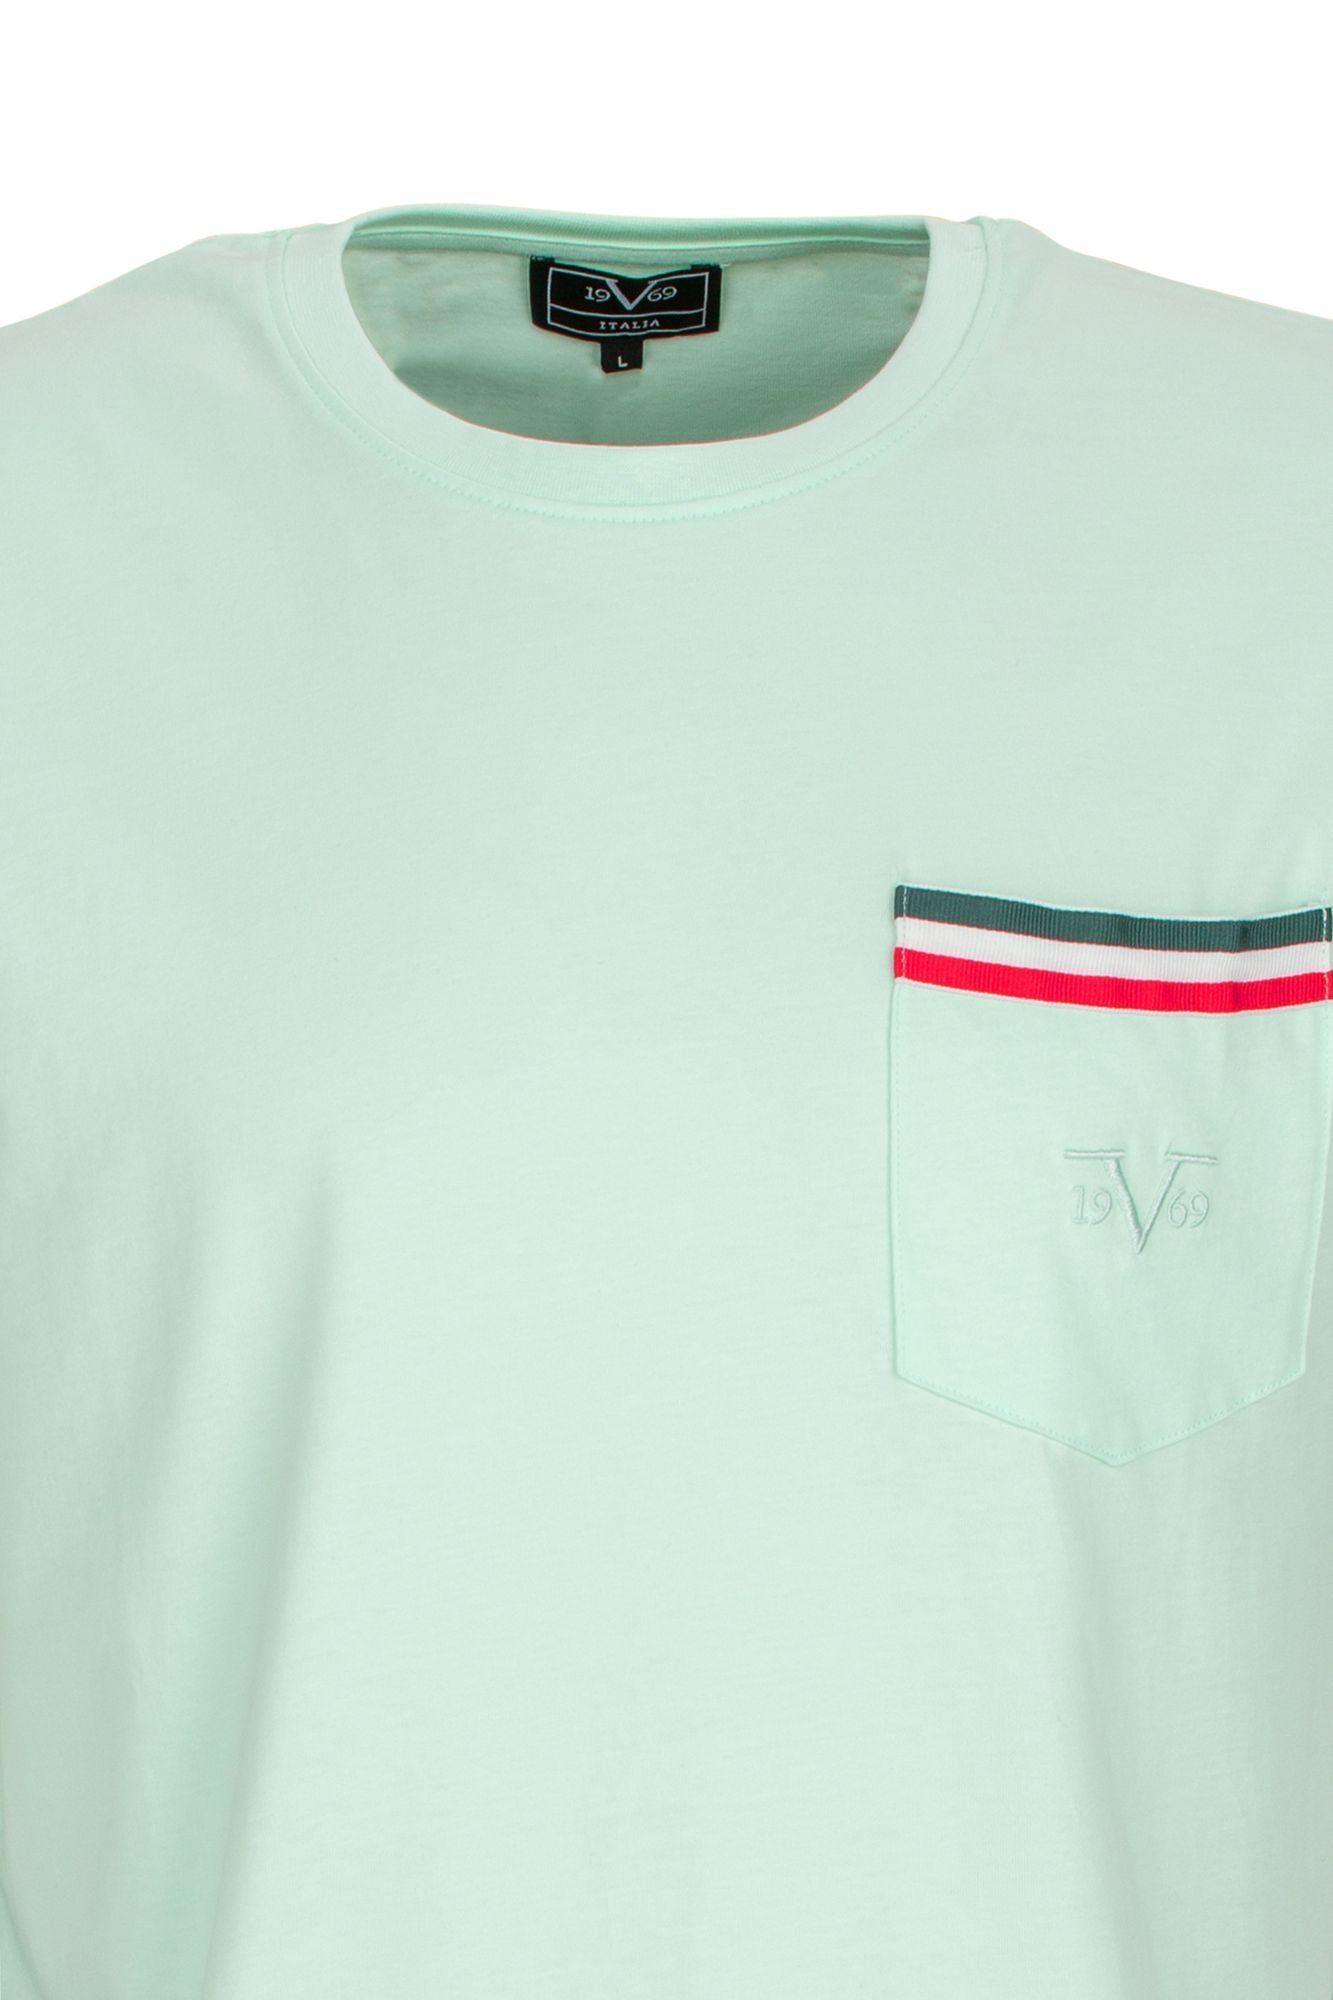 19V69 Italia Versace by T-Shirt Federico-031